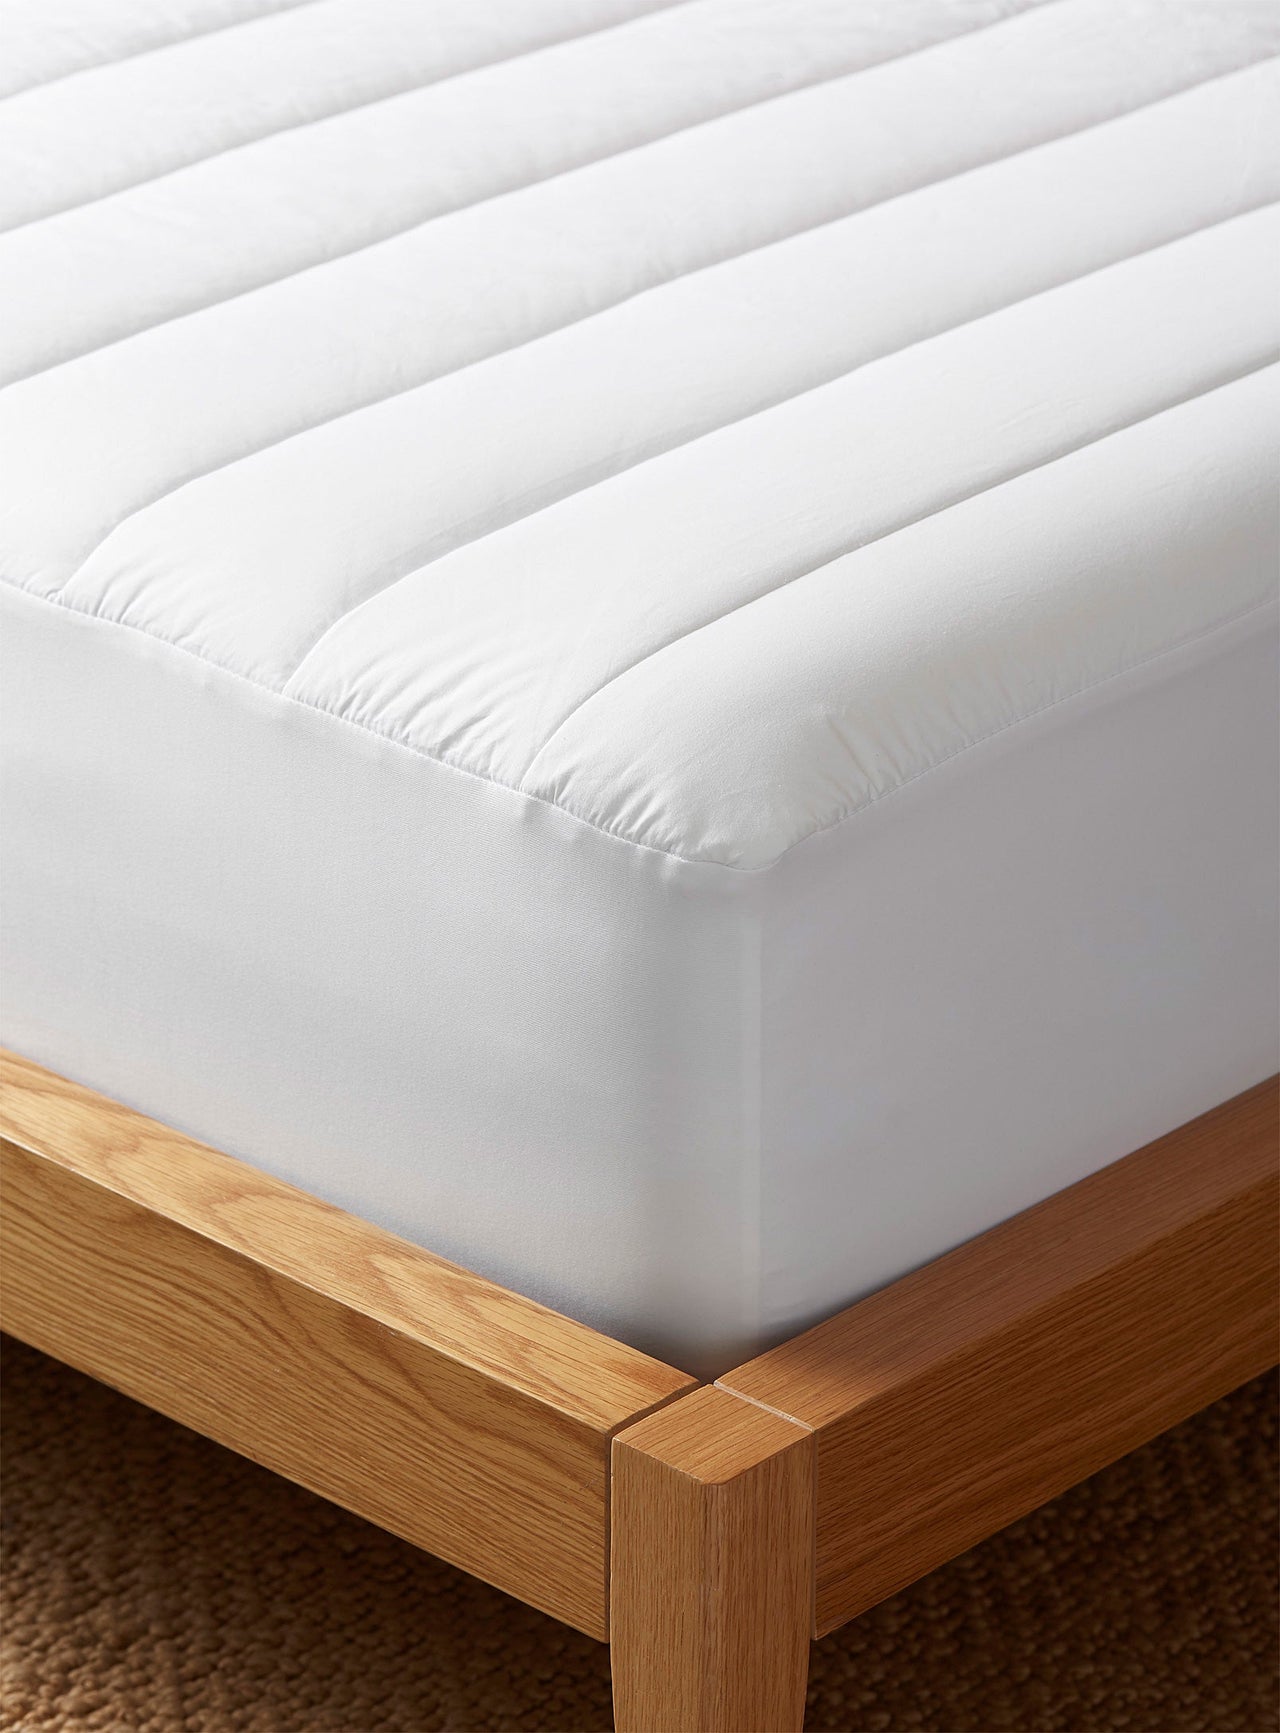 Duvetine mattress protector